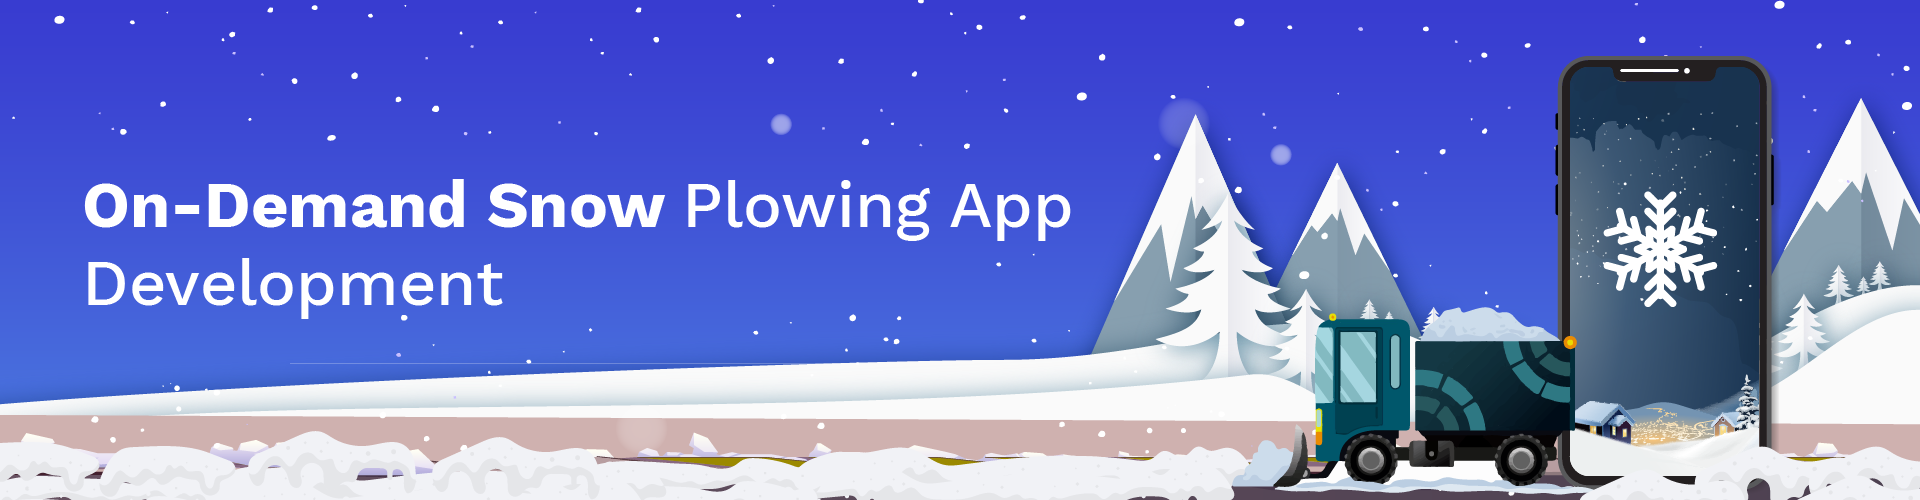 on-demand snow plowing app